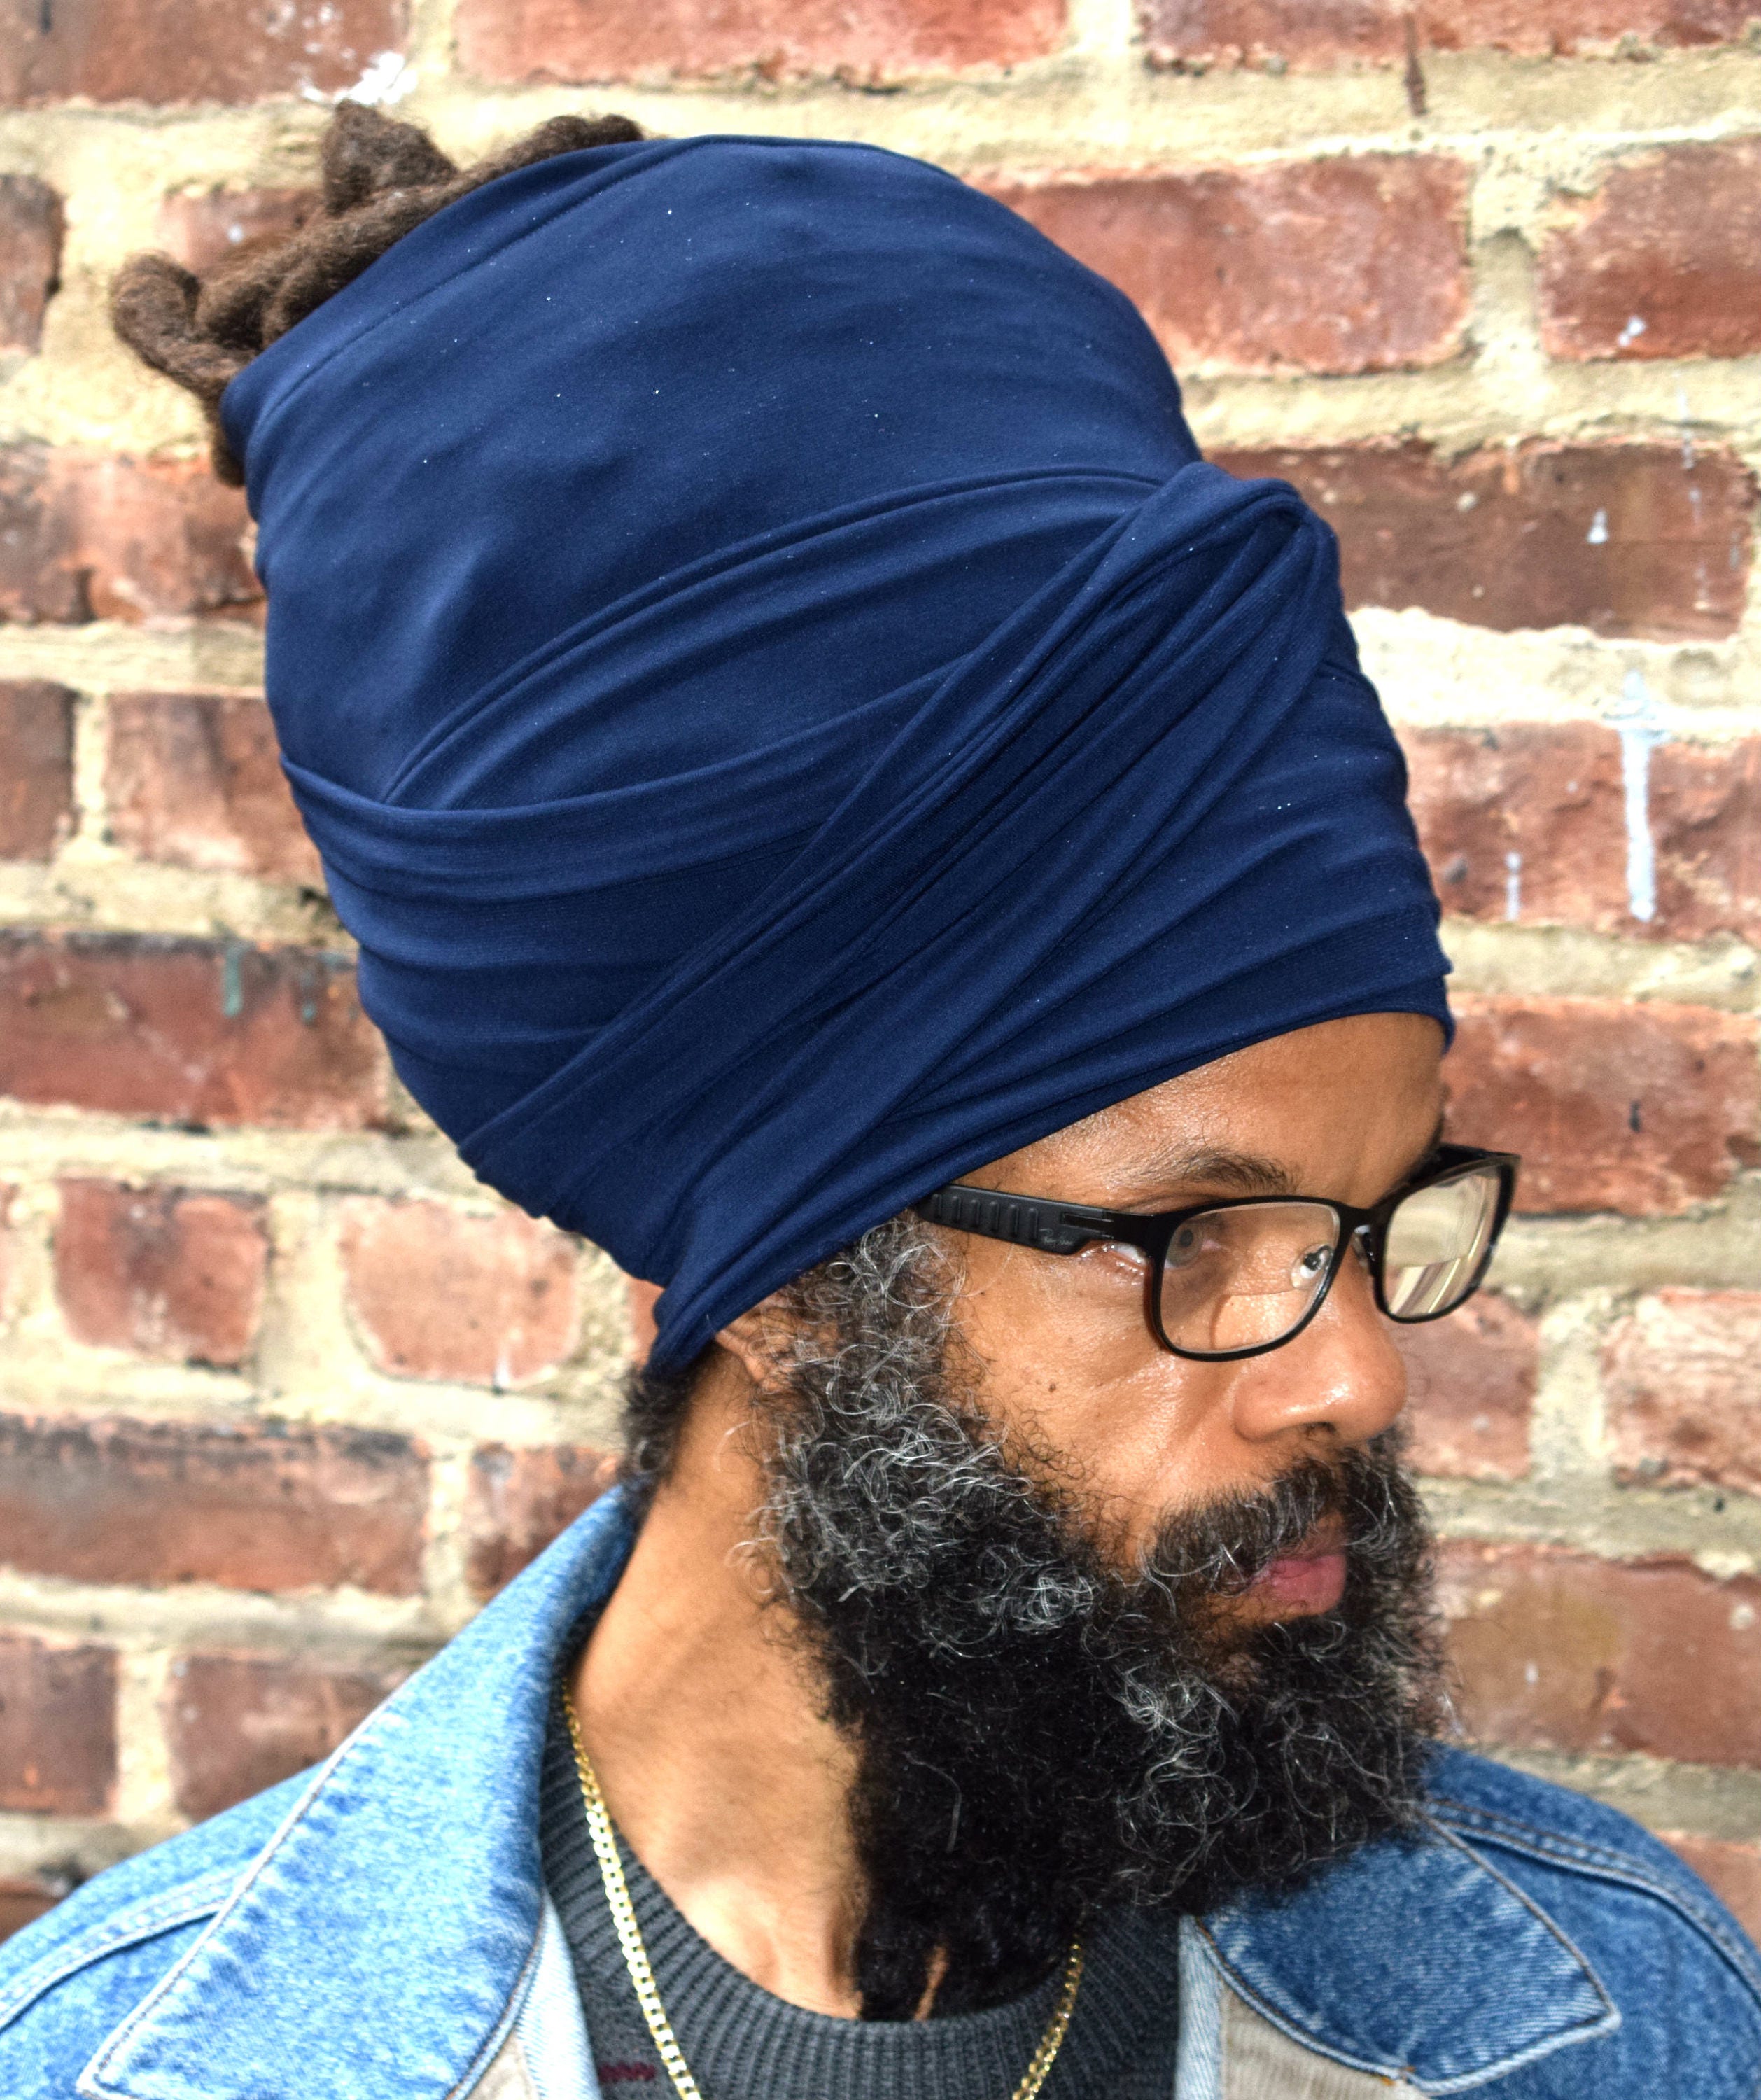 Anti-wrinkle Breathable Men's Braid Hat TUBE DREADLOCKS WAVE CAP